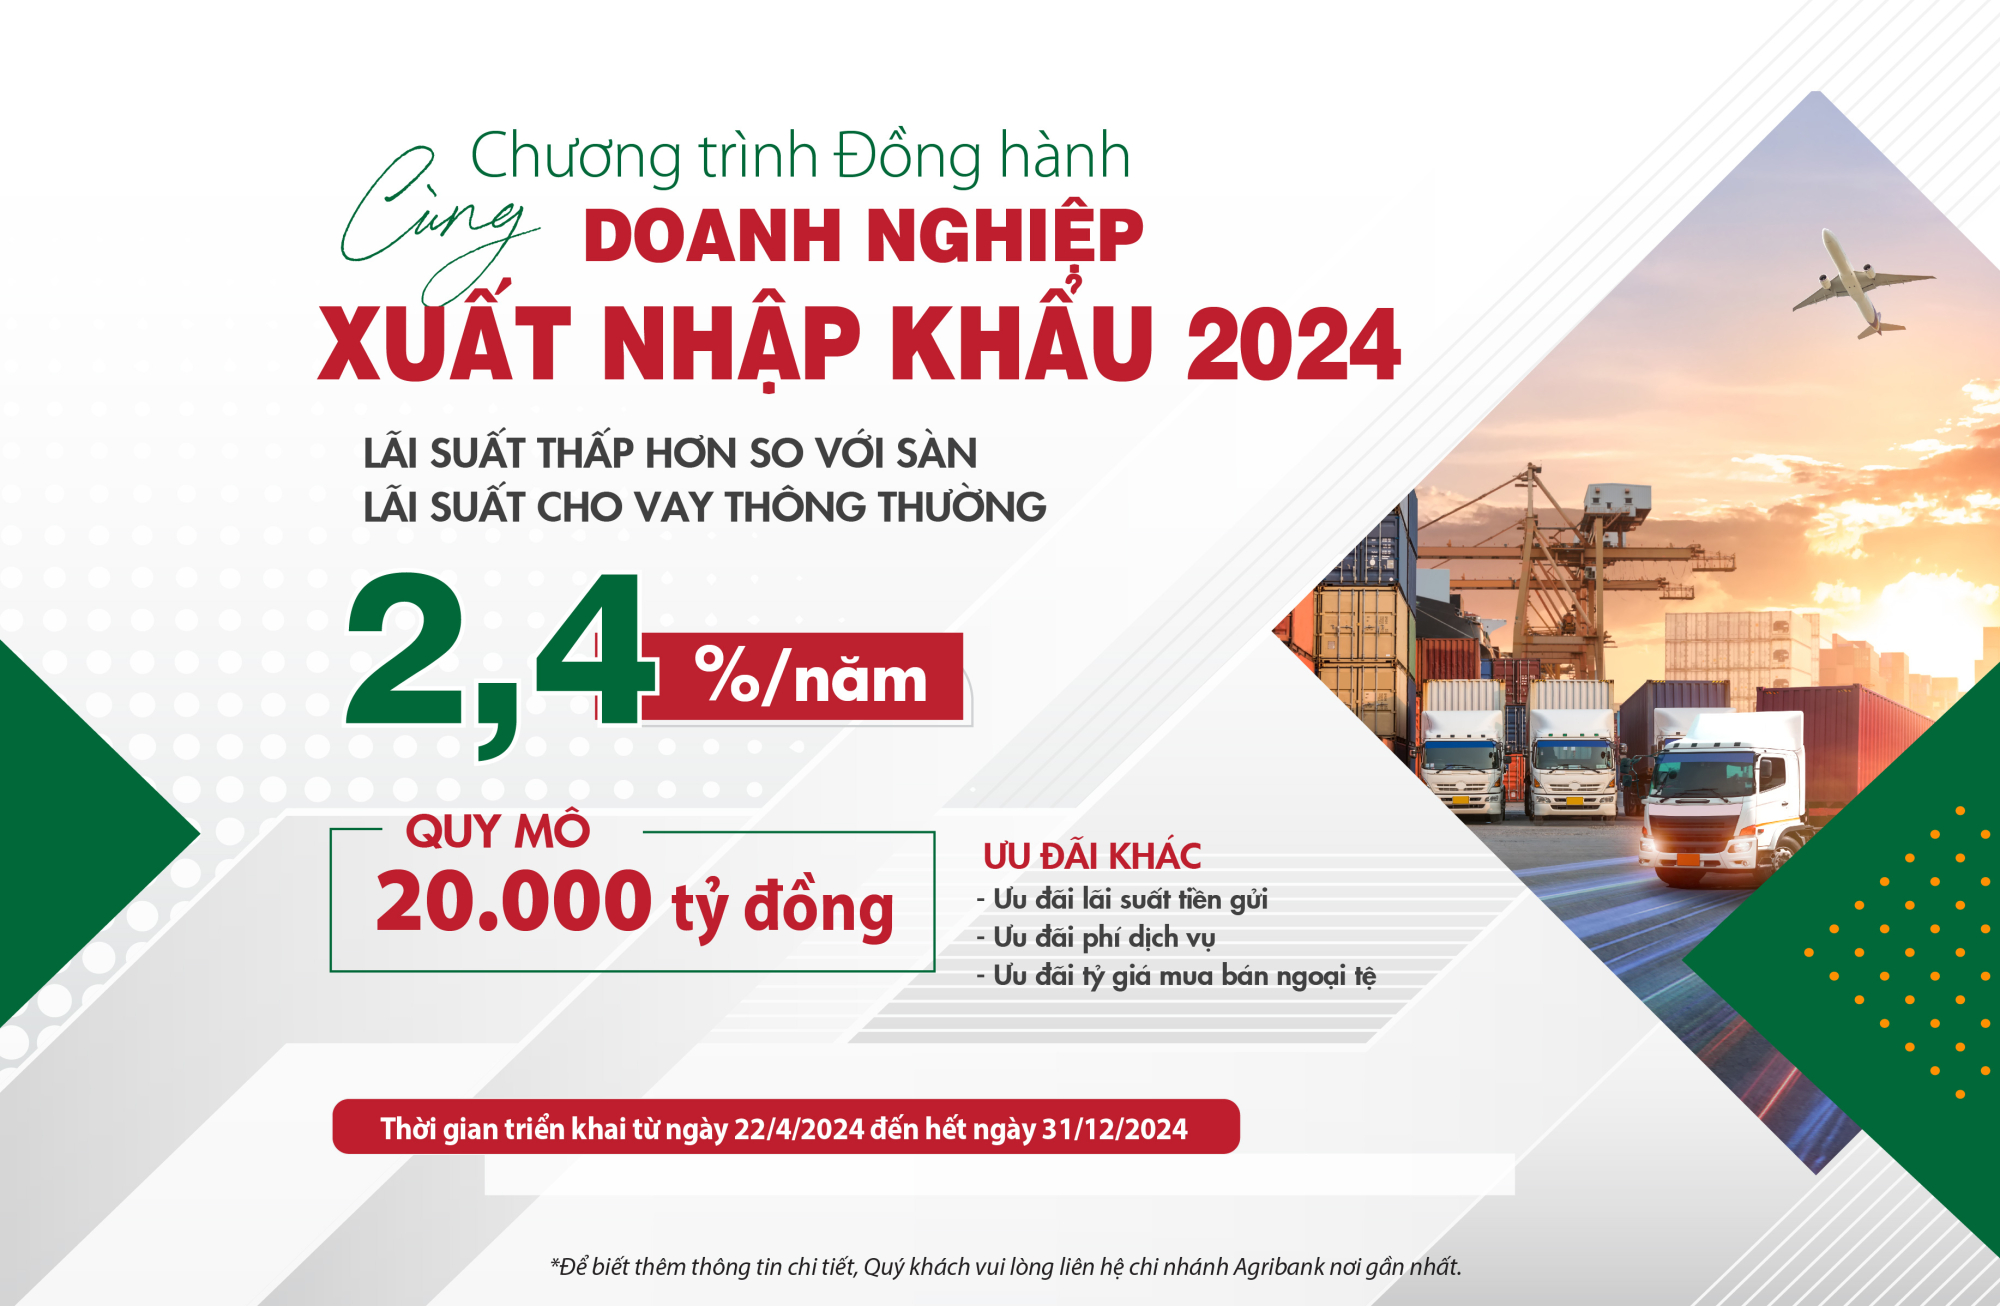 agribank dong hanh cung doanh nghiep xuat nhap khau nam 2024 hinh 1